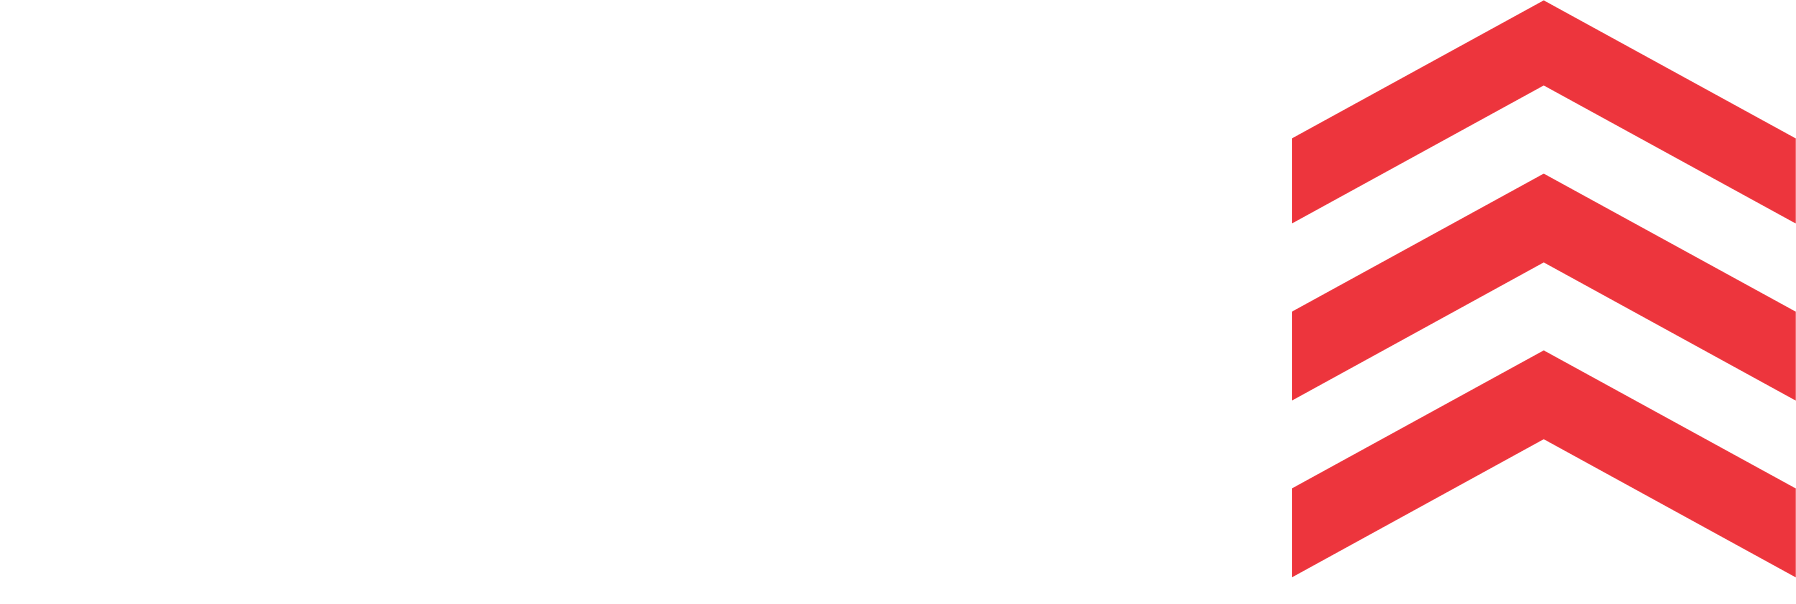 All State Vertex